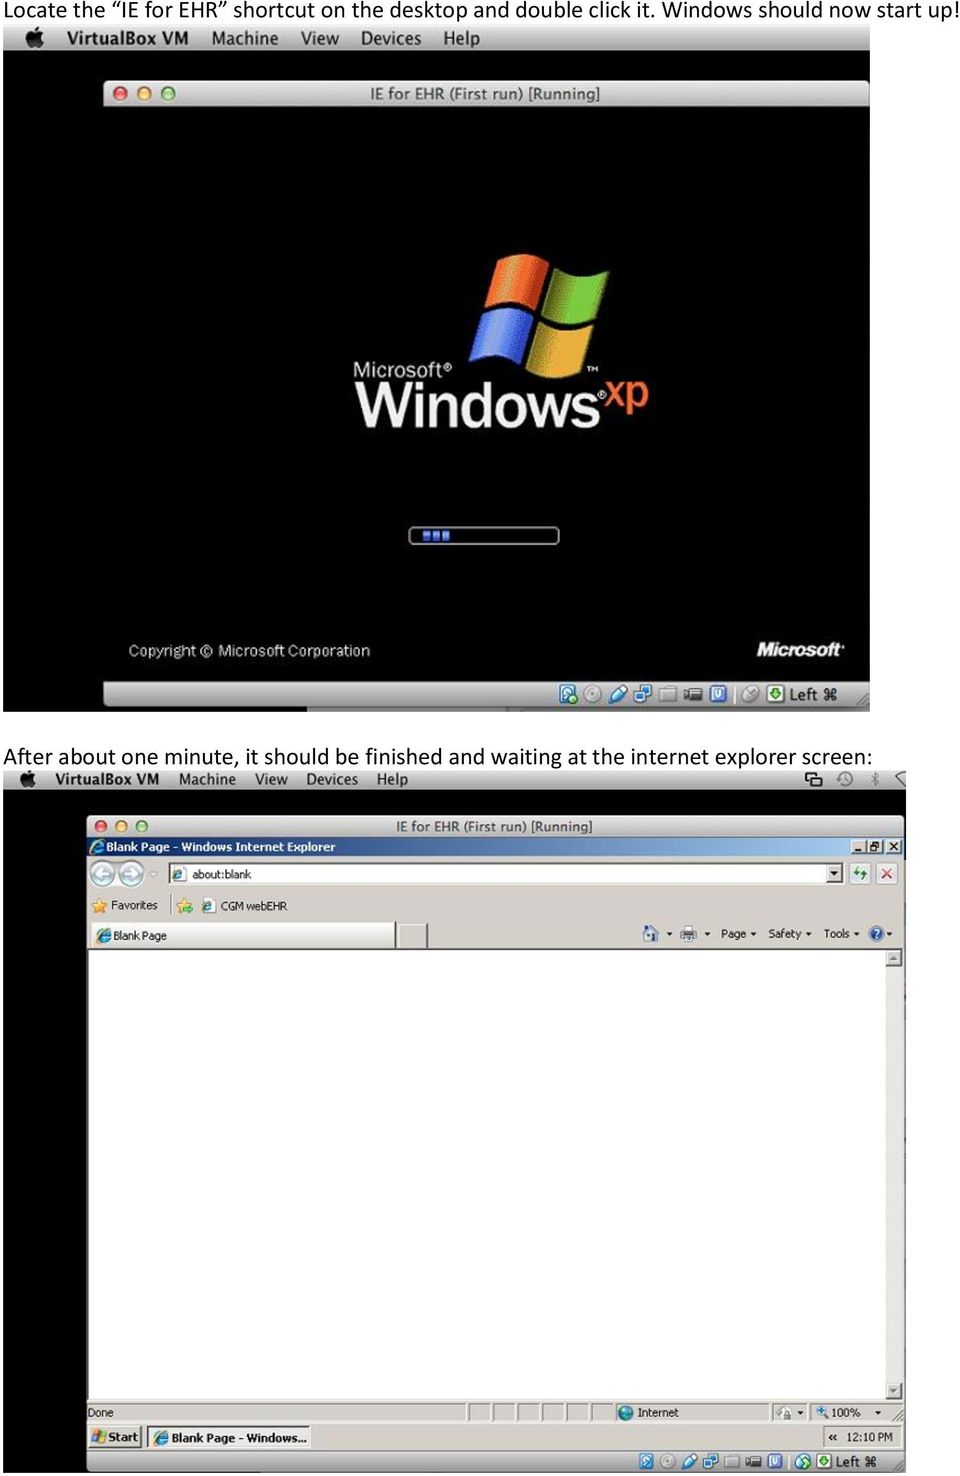 Windows should now start up!